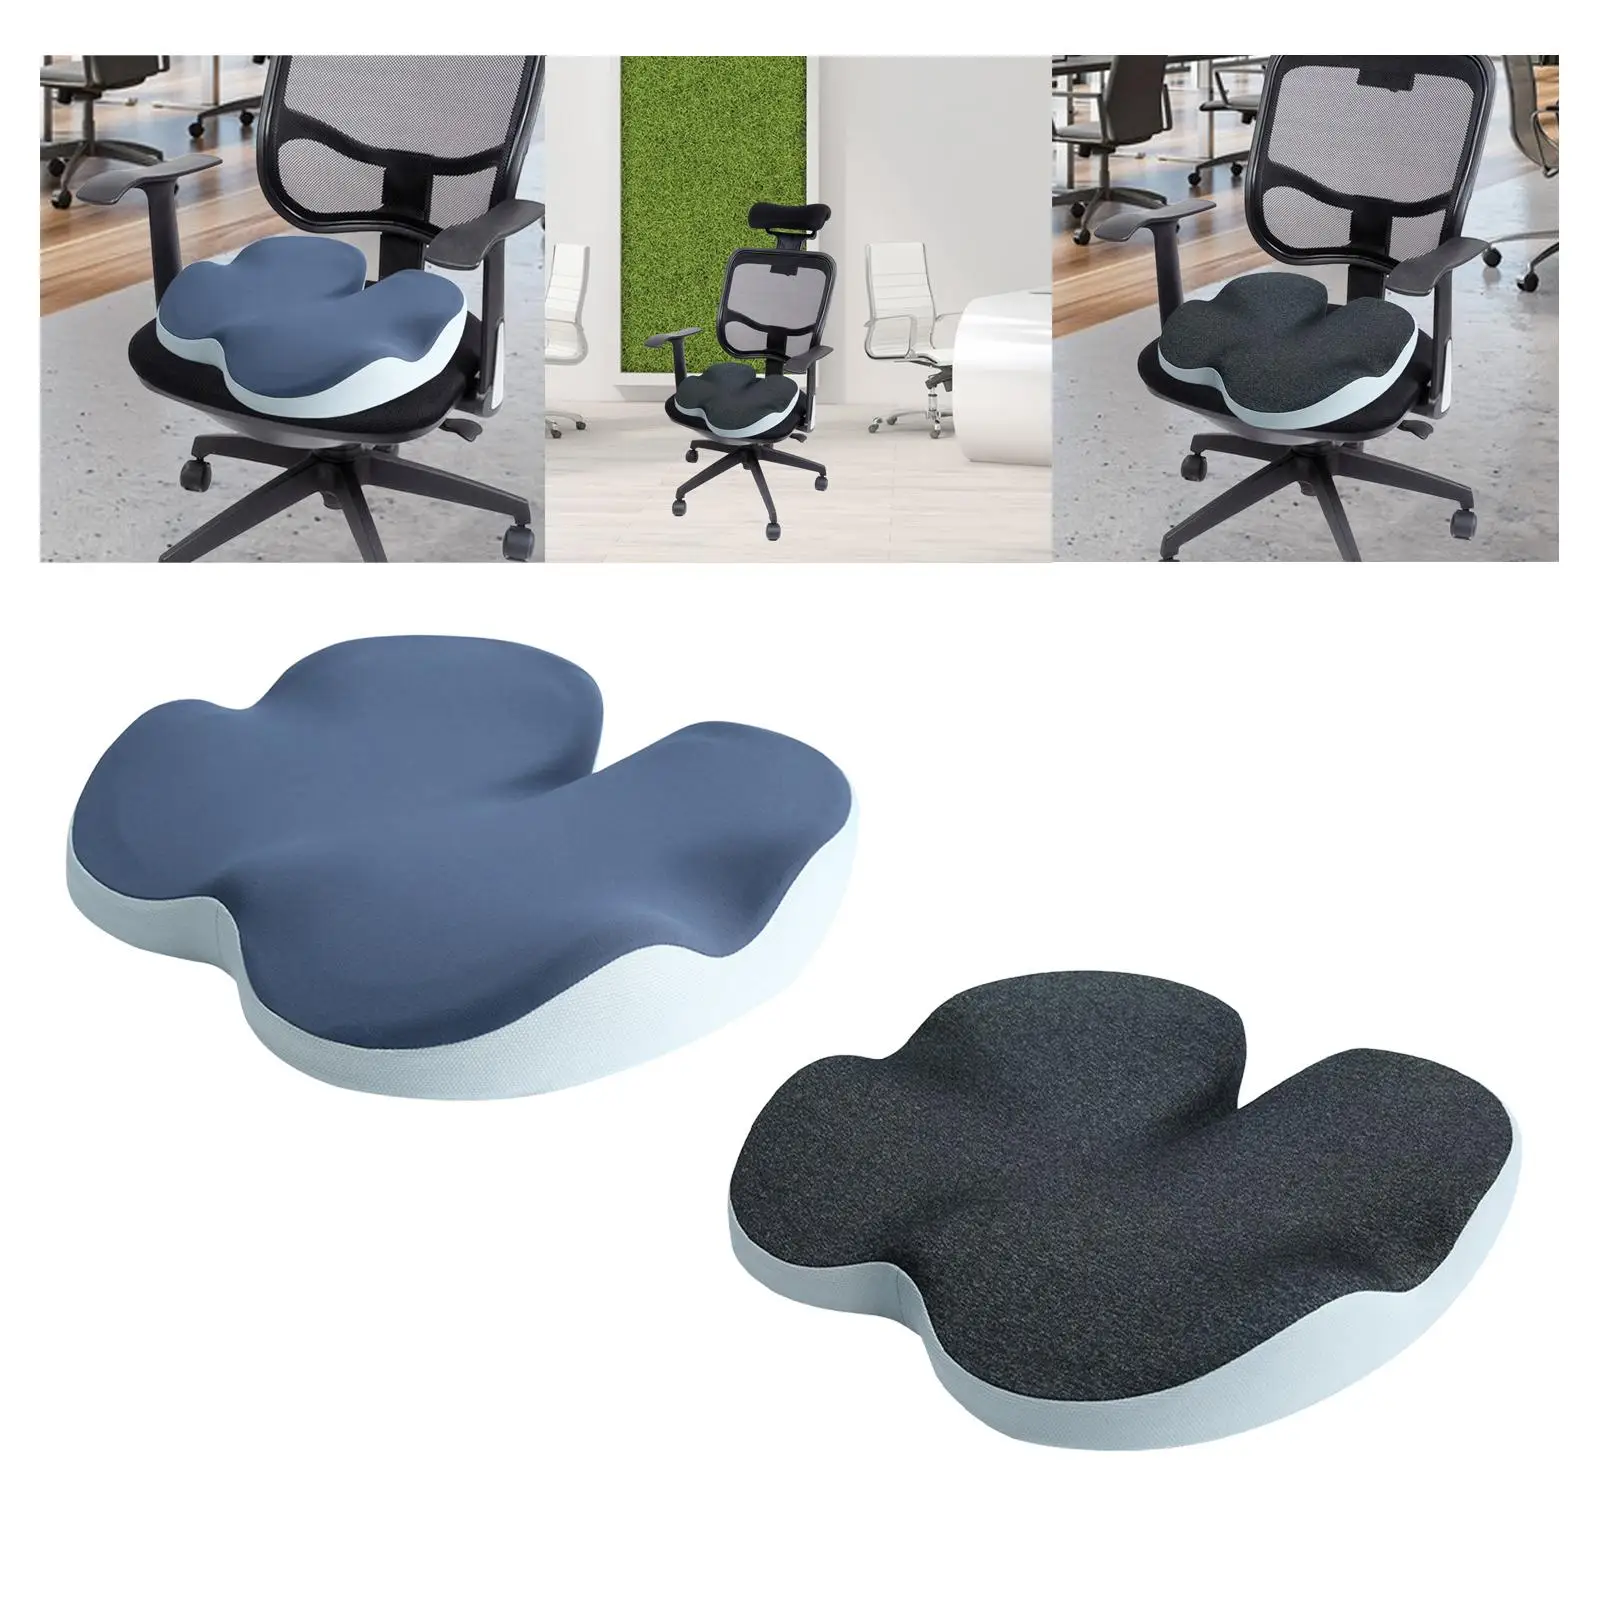 Memory Foam Seat Cushion Non Slip Washable Soft Breathable Chair Pad Ergonomic Seat Pillow Chair Cushion for Home